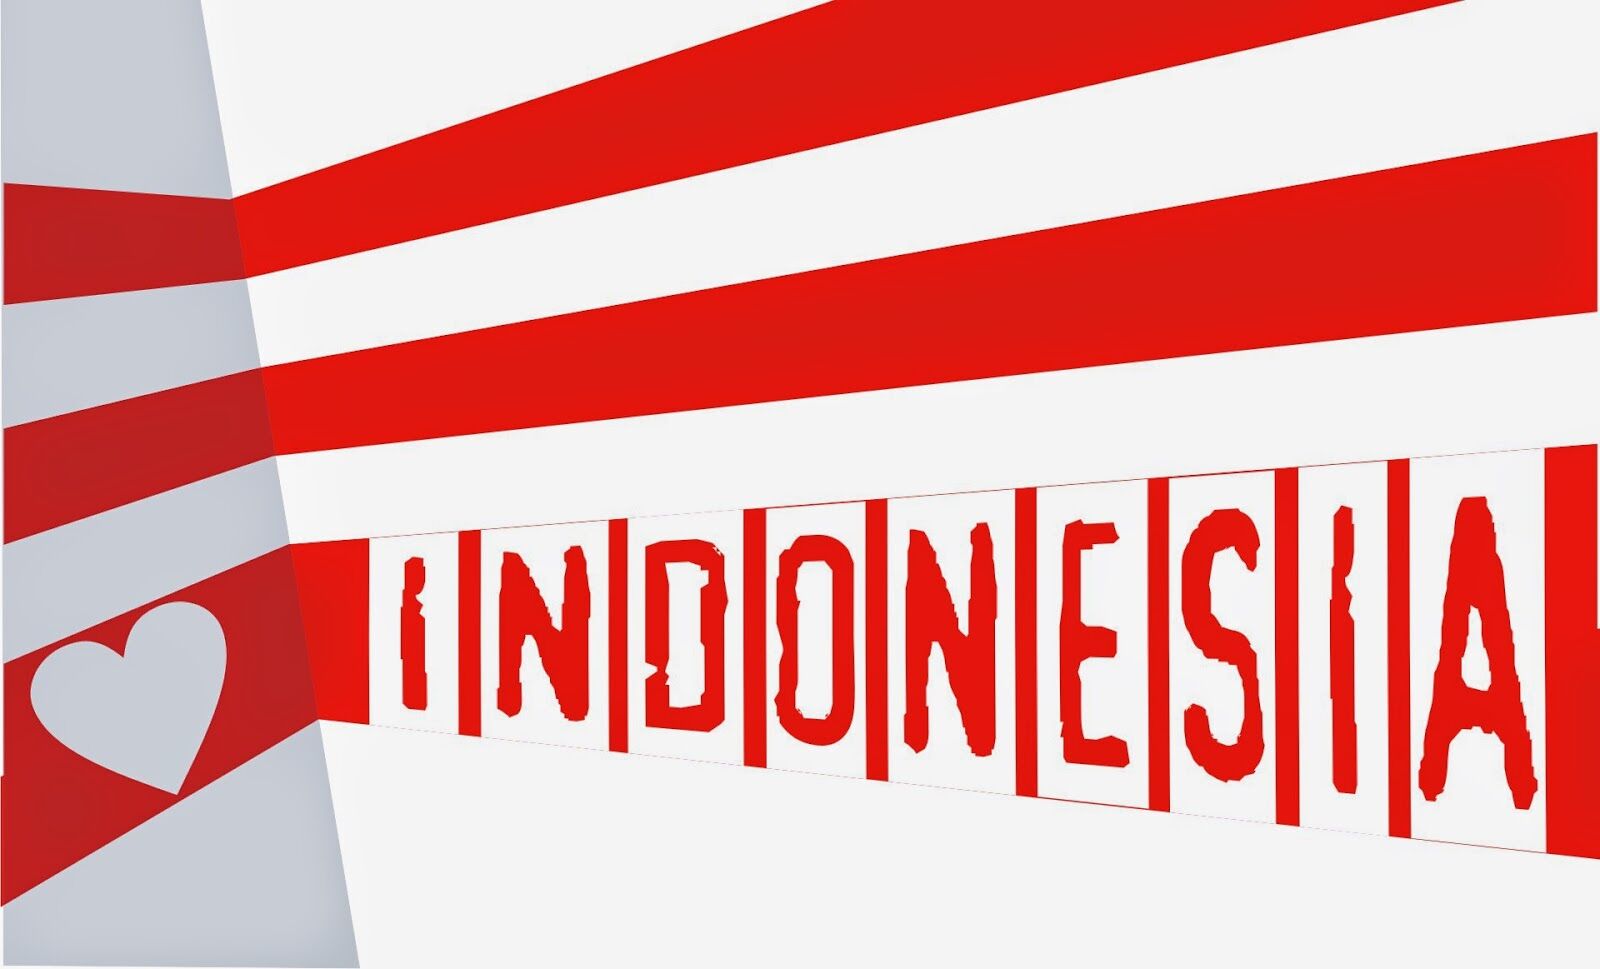 Cinta Bahasa Indonesia